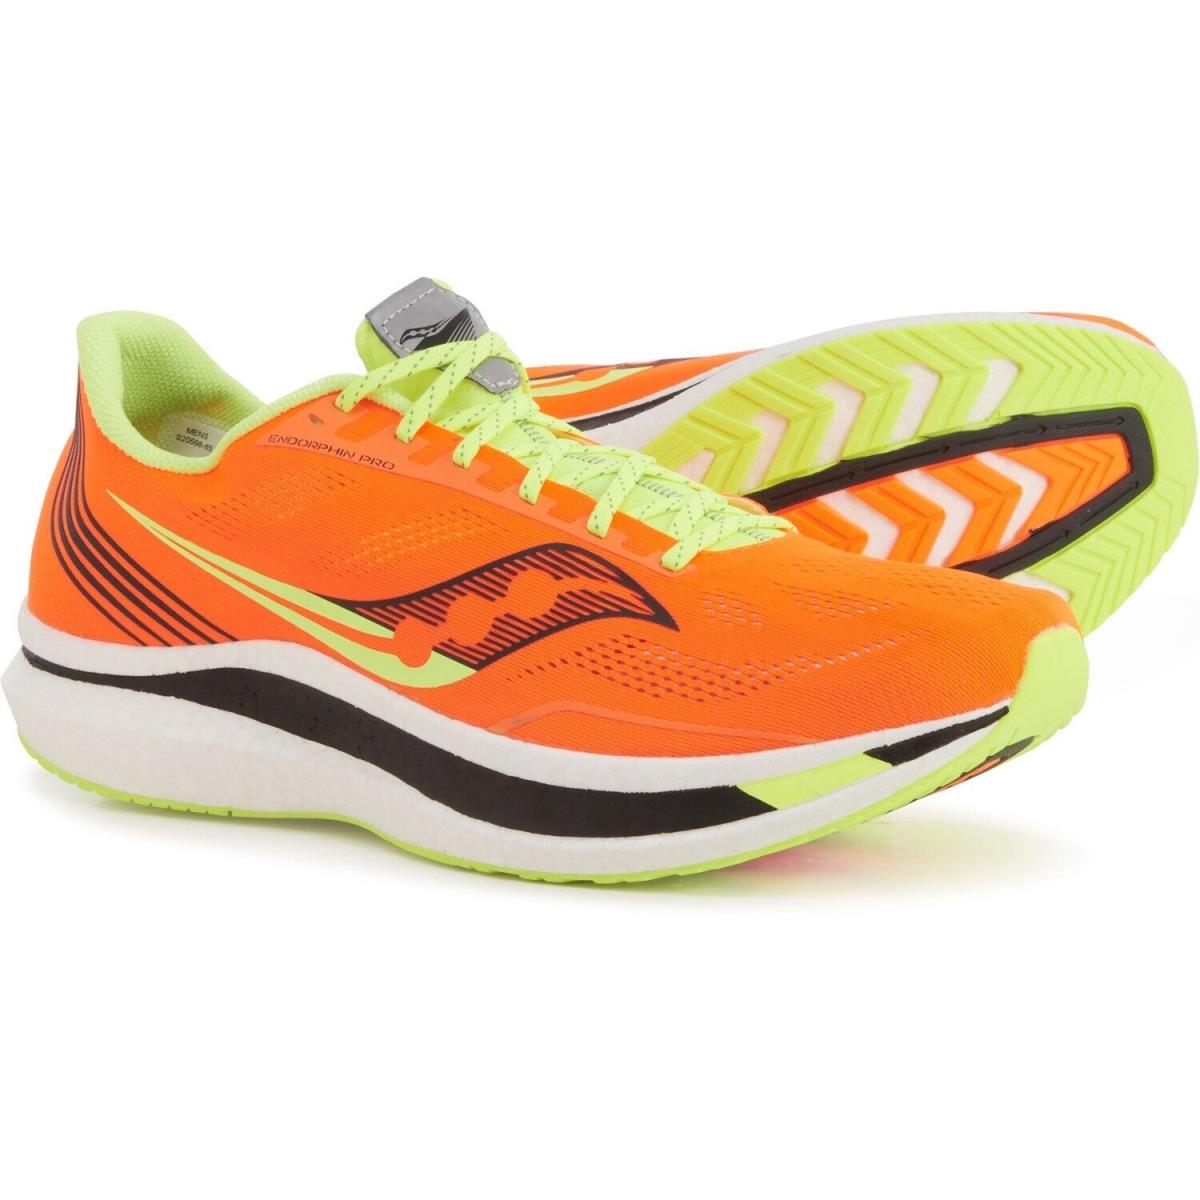 Saucony Endorphin Pro Running Shoes Men`s Size 12 D Vizi Orange S20598-65 - Vizi Orange, Manufacturer: VIzi Orange